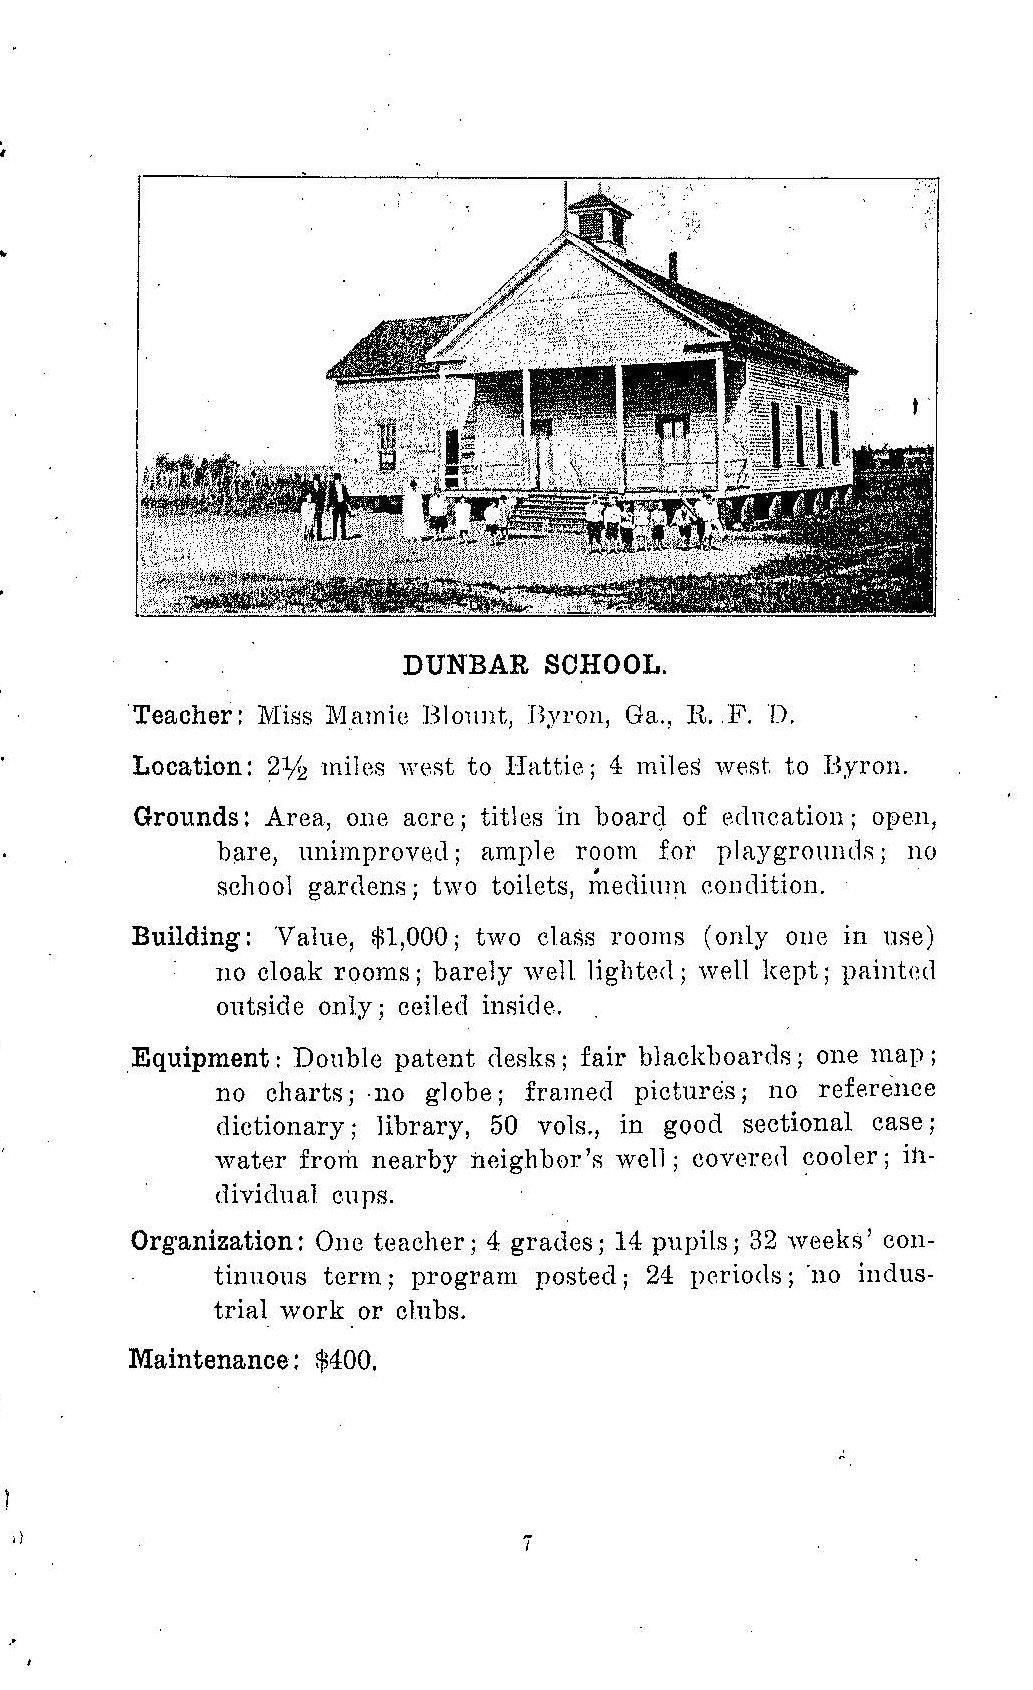 Dunbar School